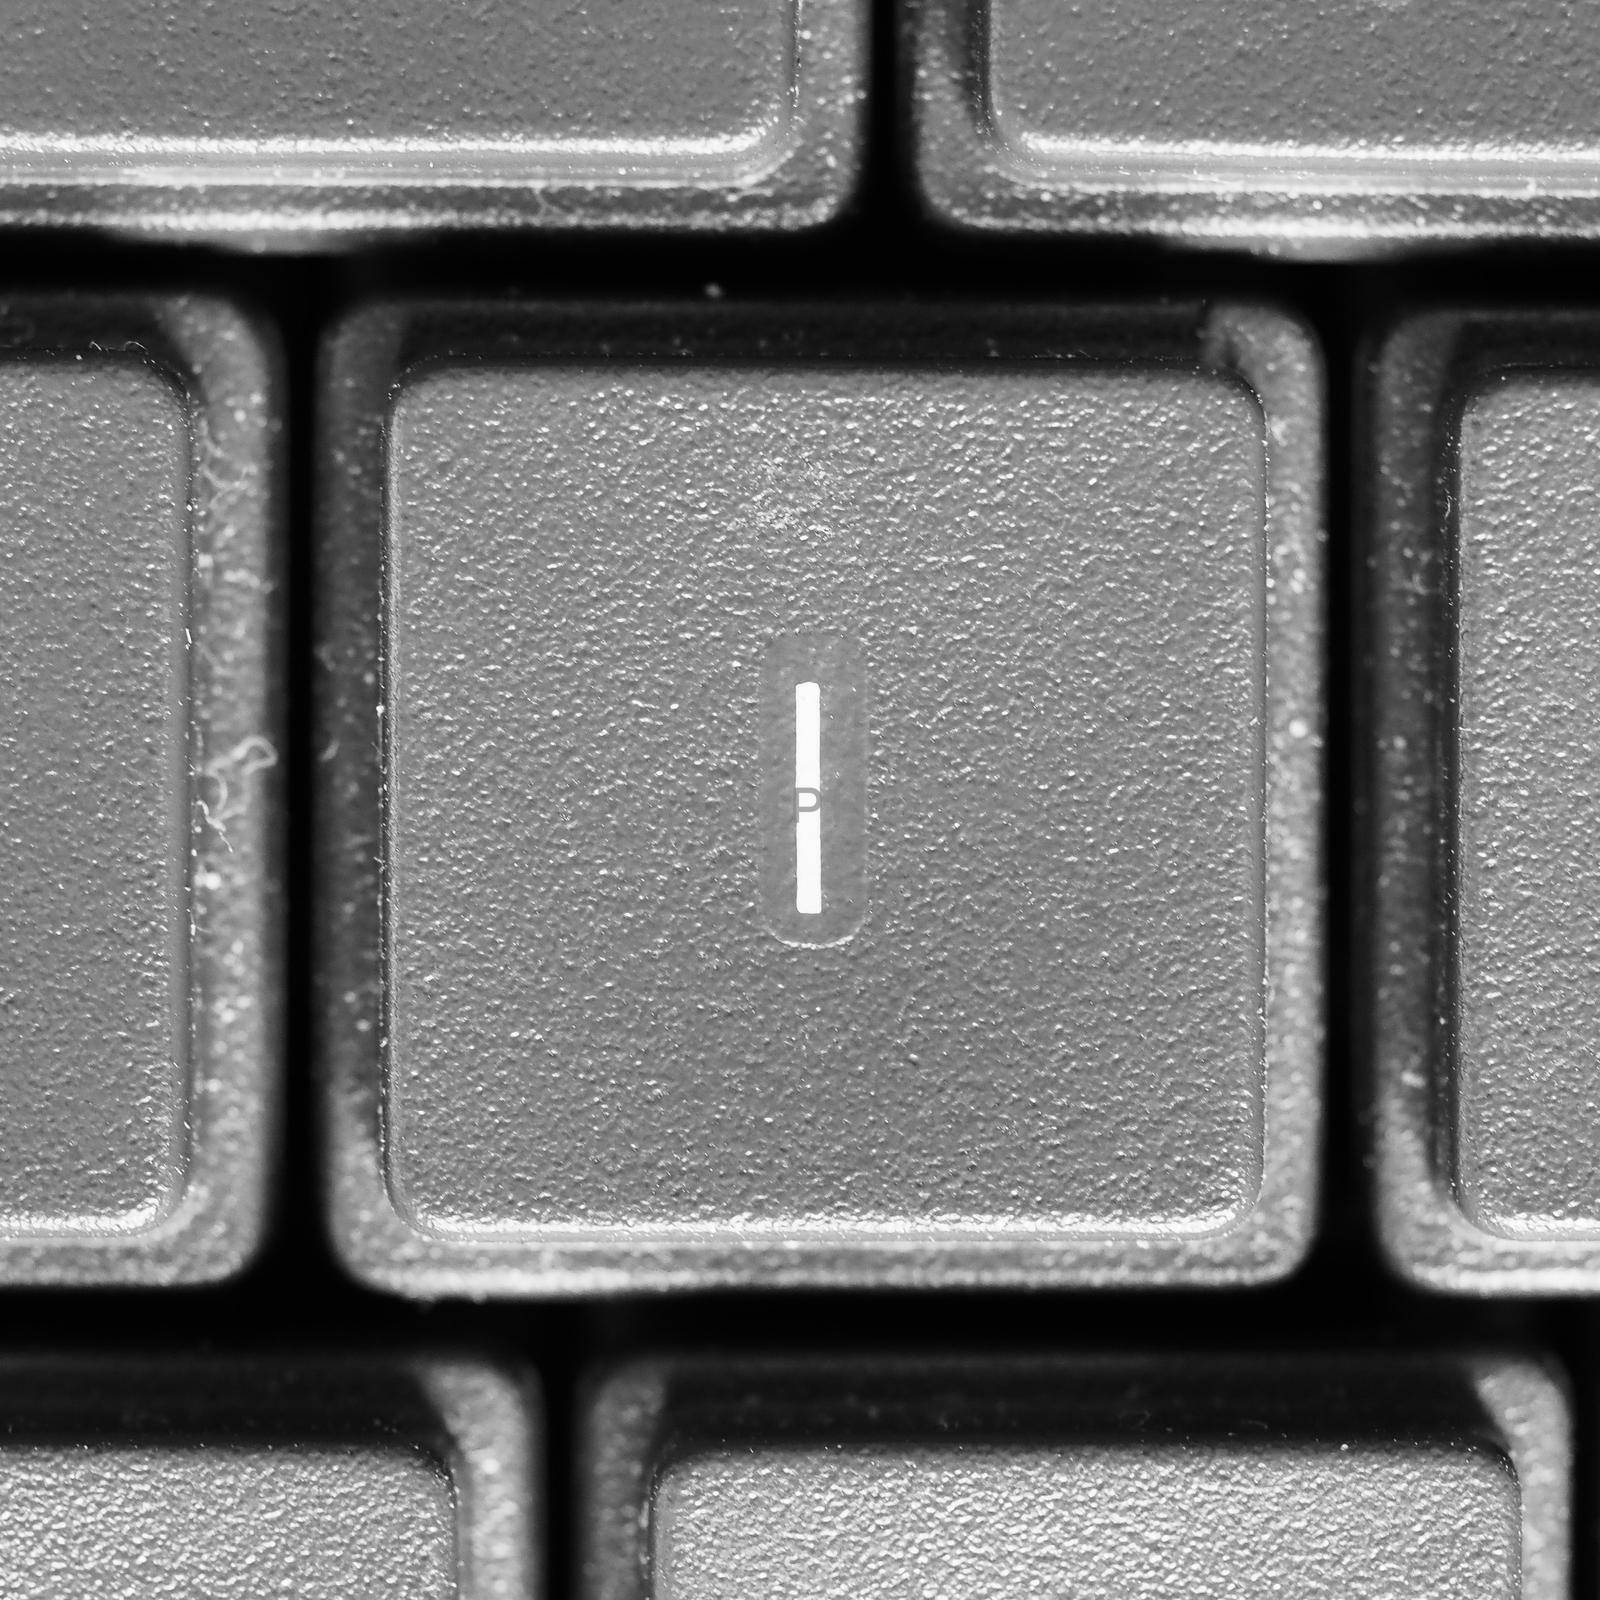 Letter I key on computer keyboard keypad